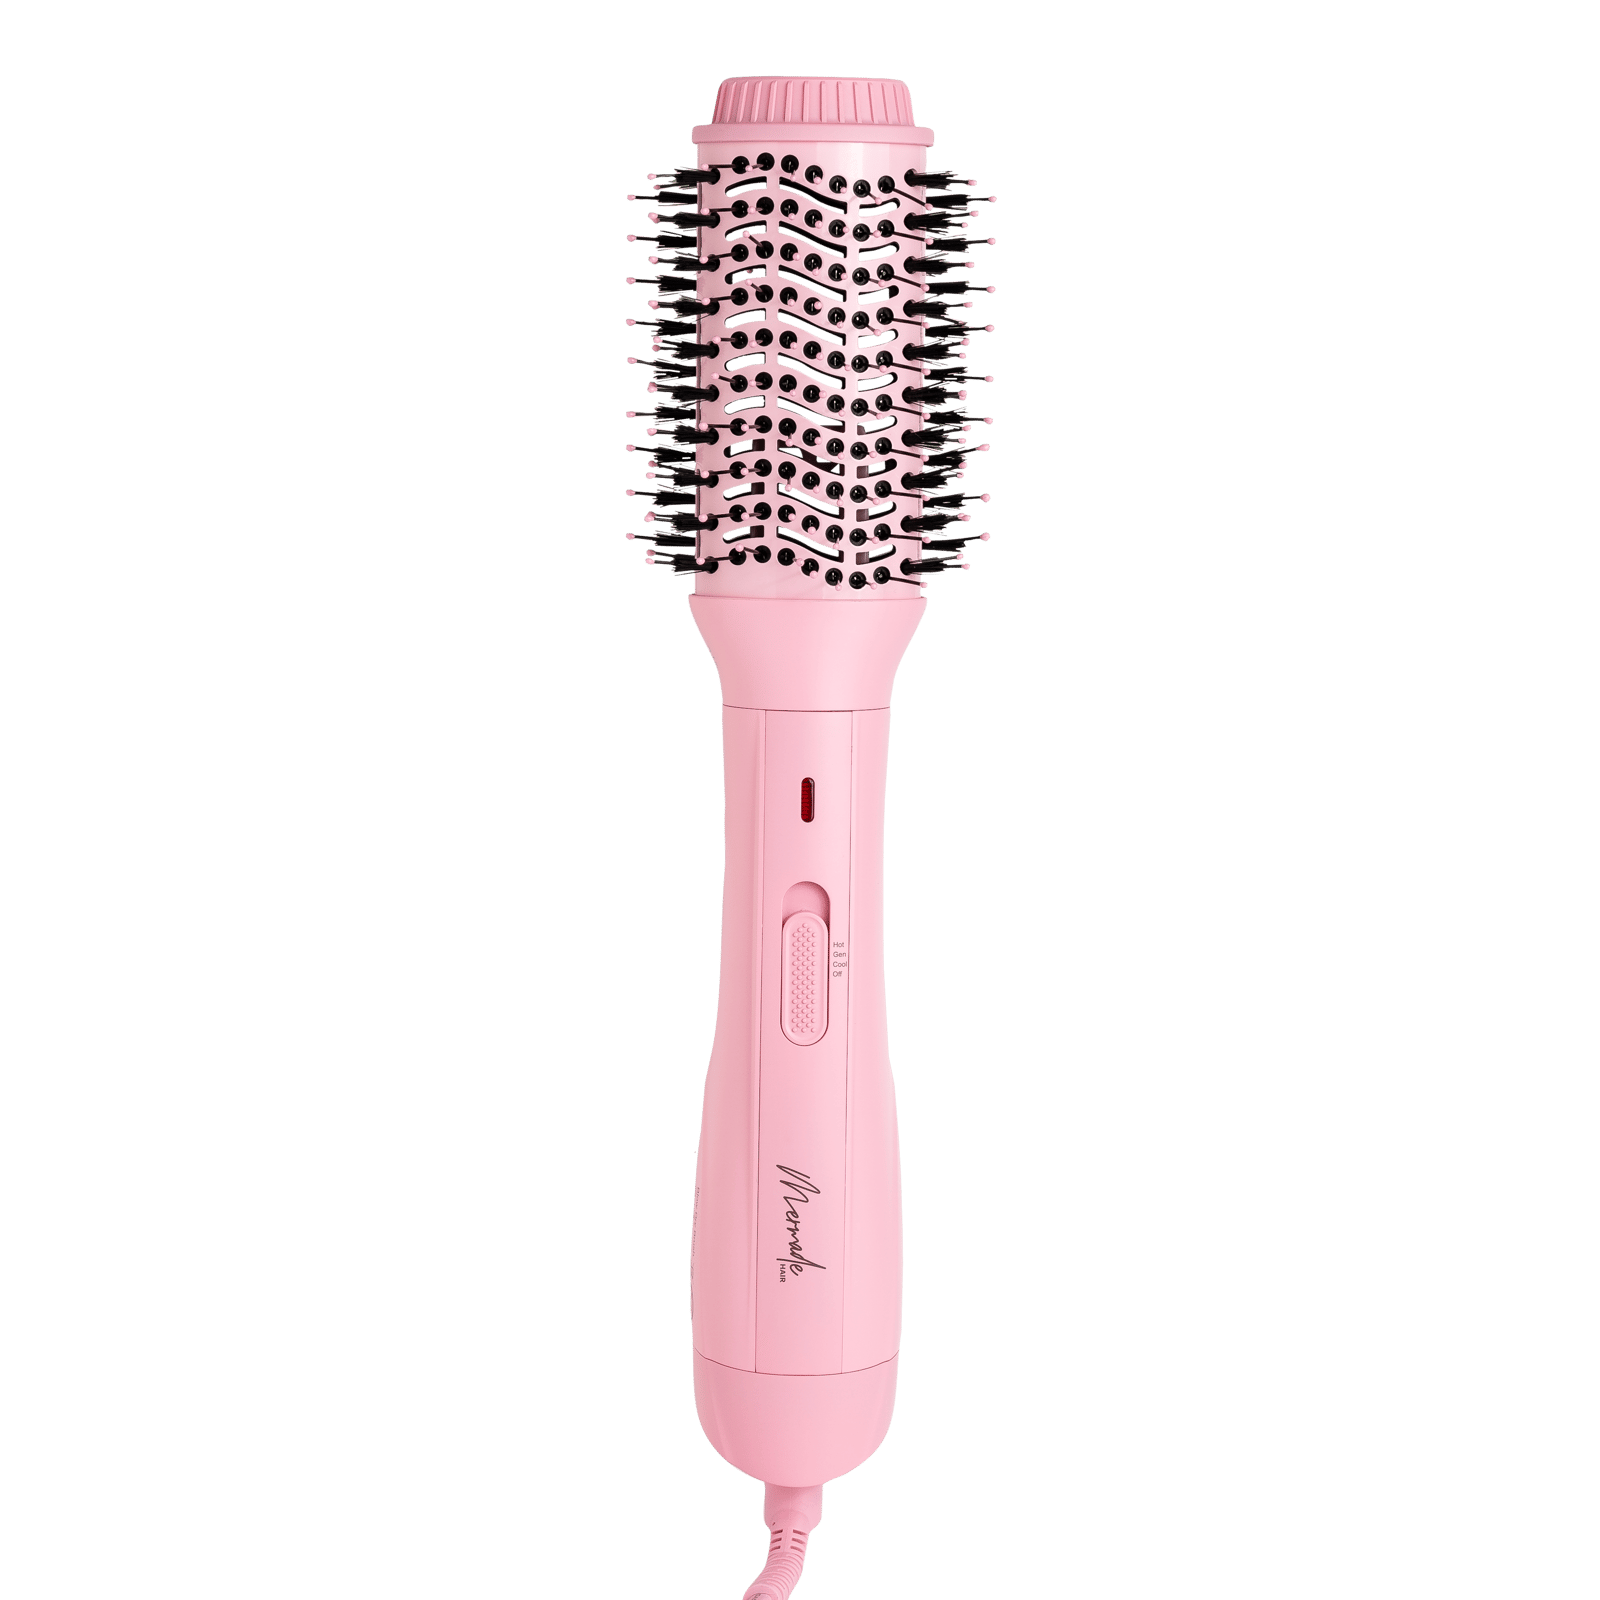 Mermade Blow Dry Brush - Pink